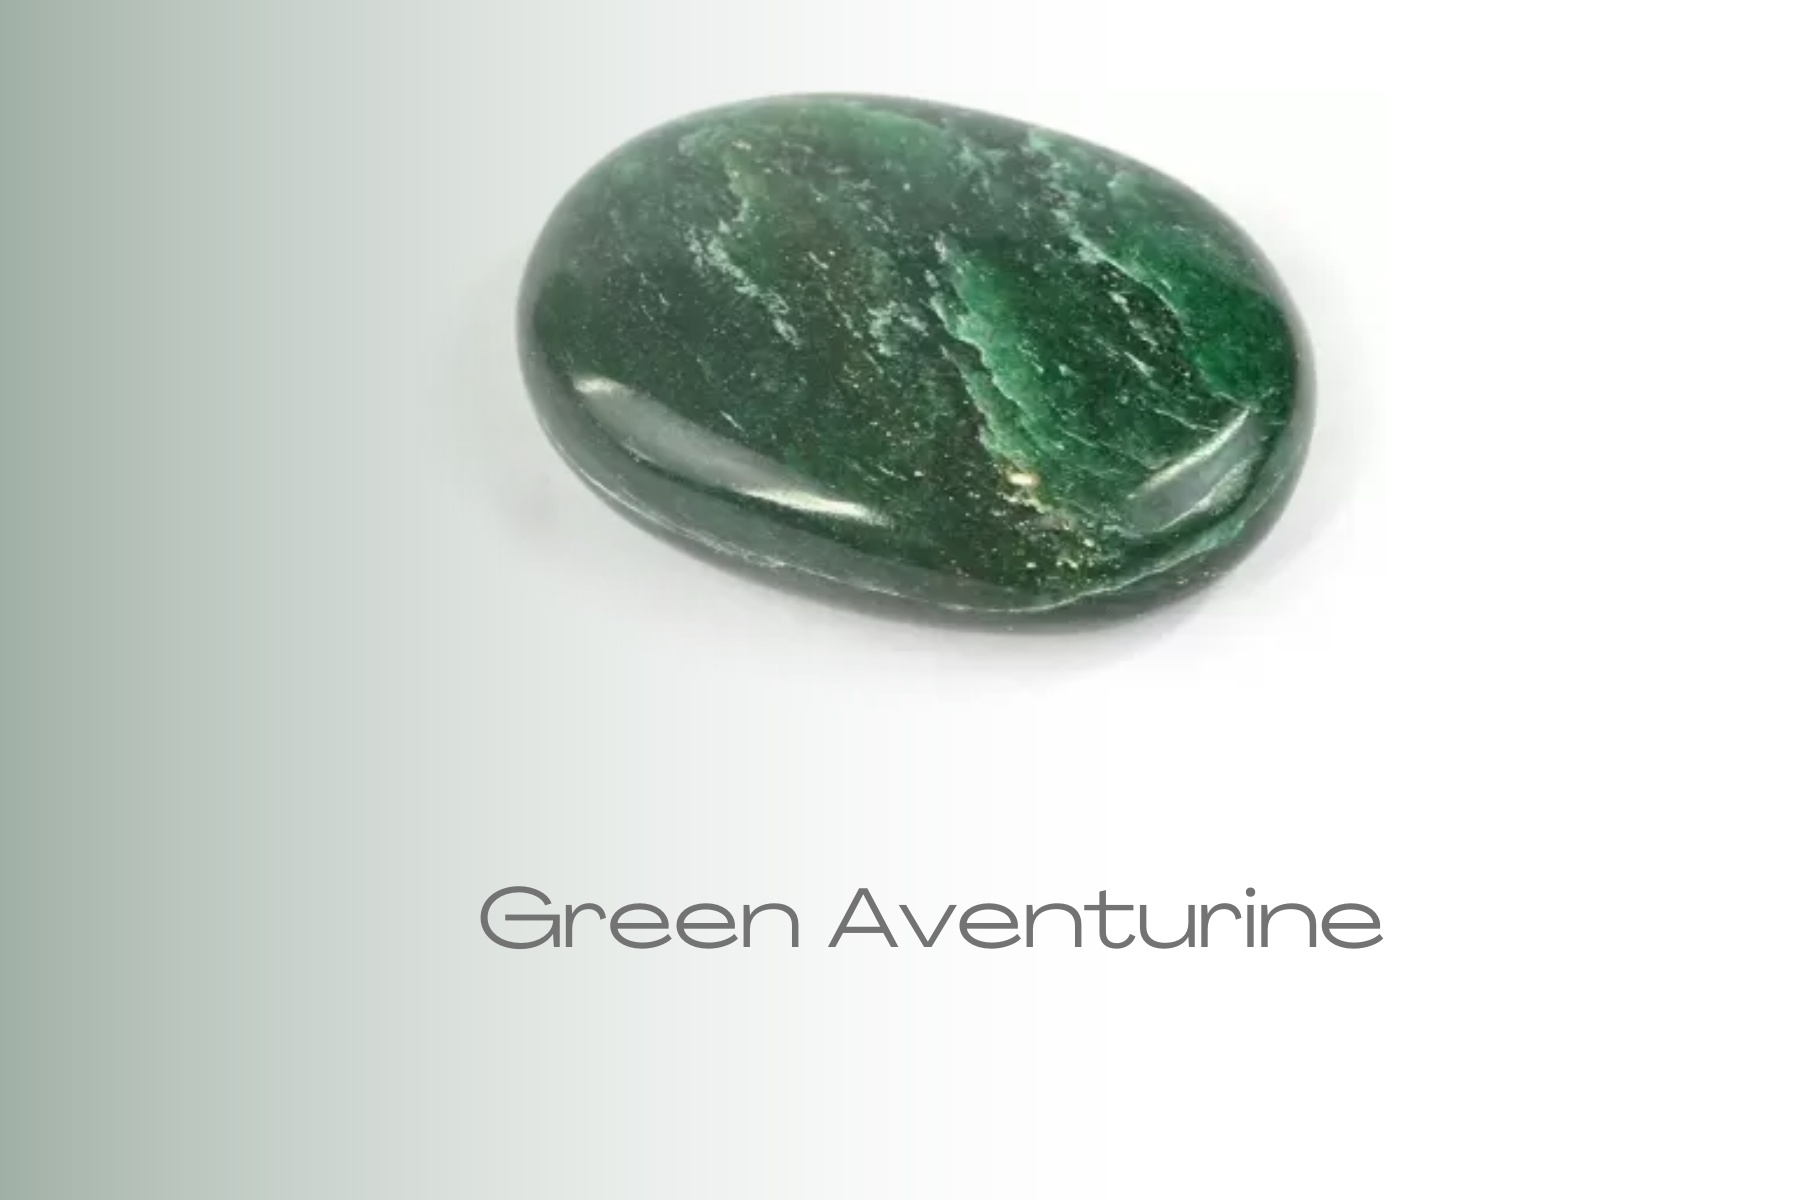 Oblong green aventurine stone